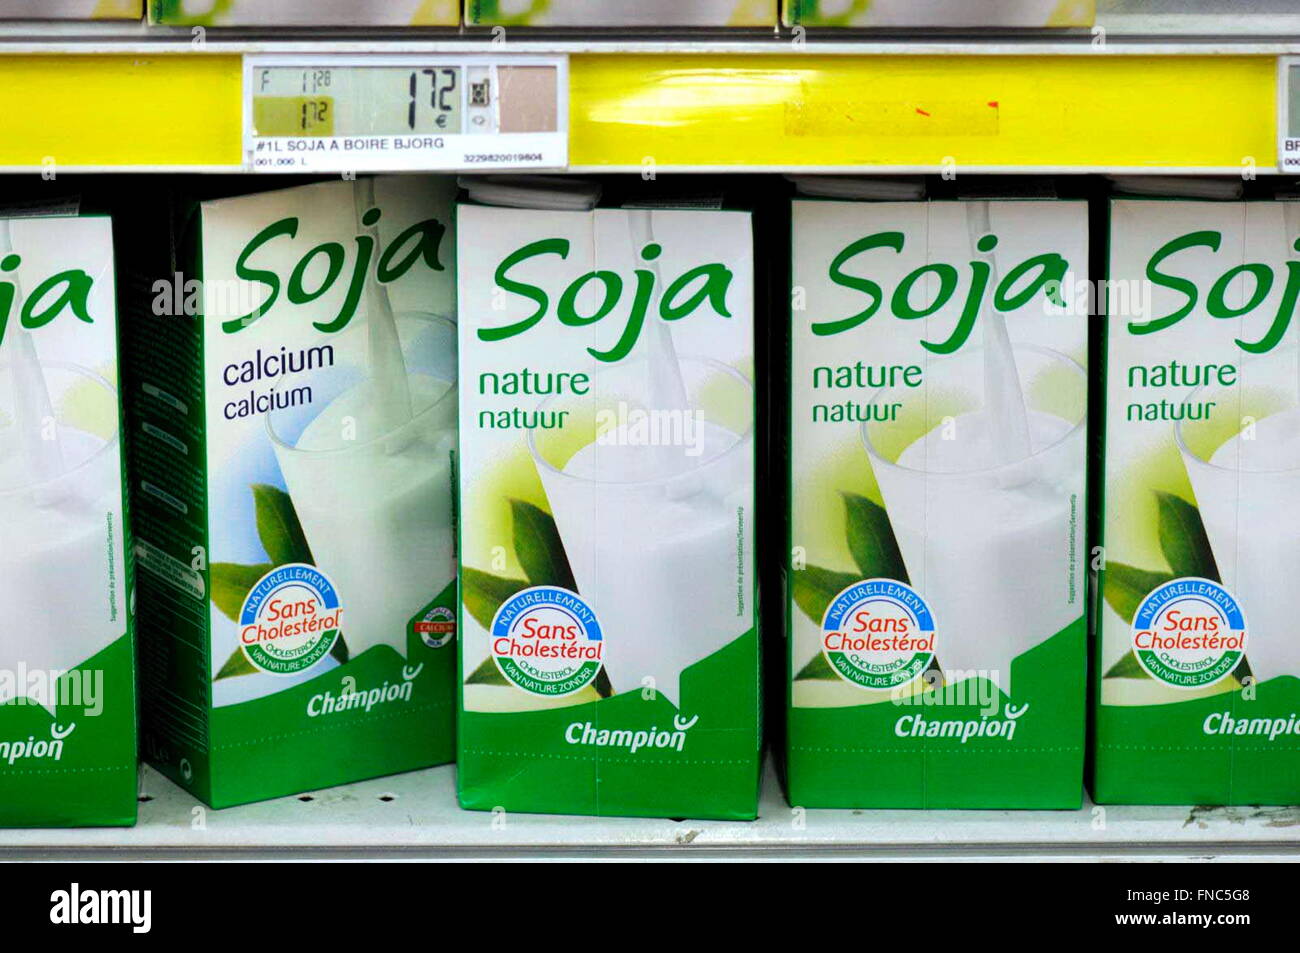 Bjorg Organic Soya Milk No Sugar 1L